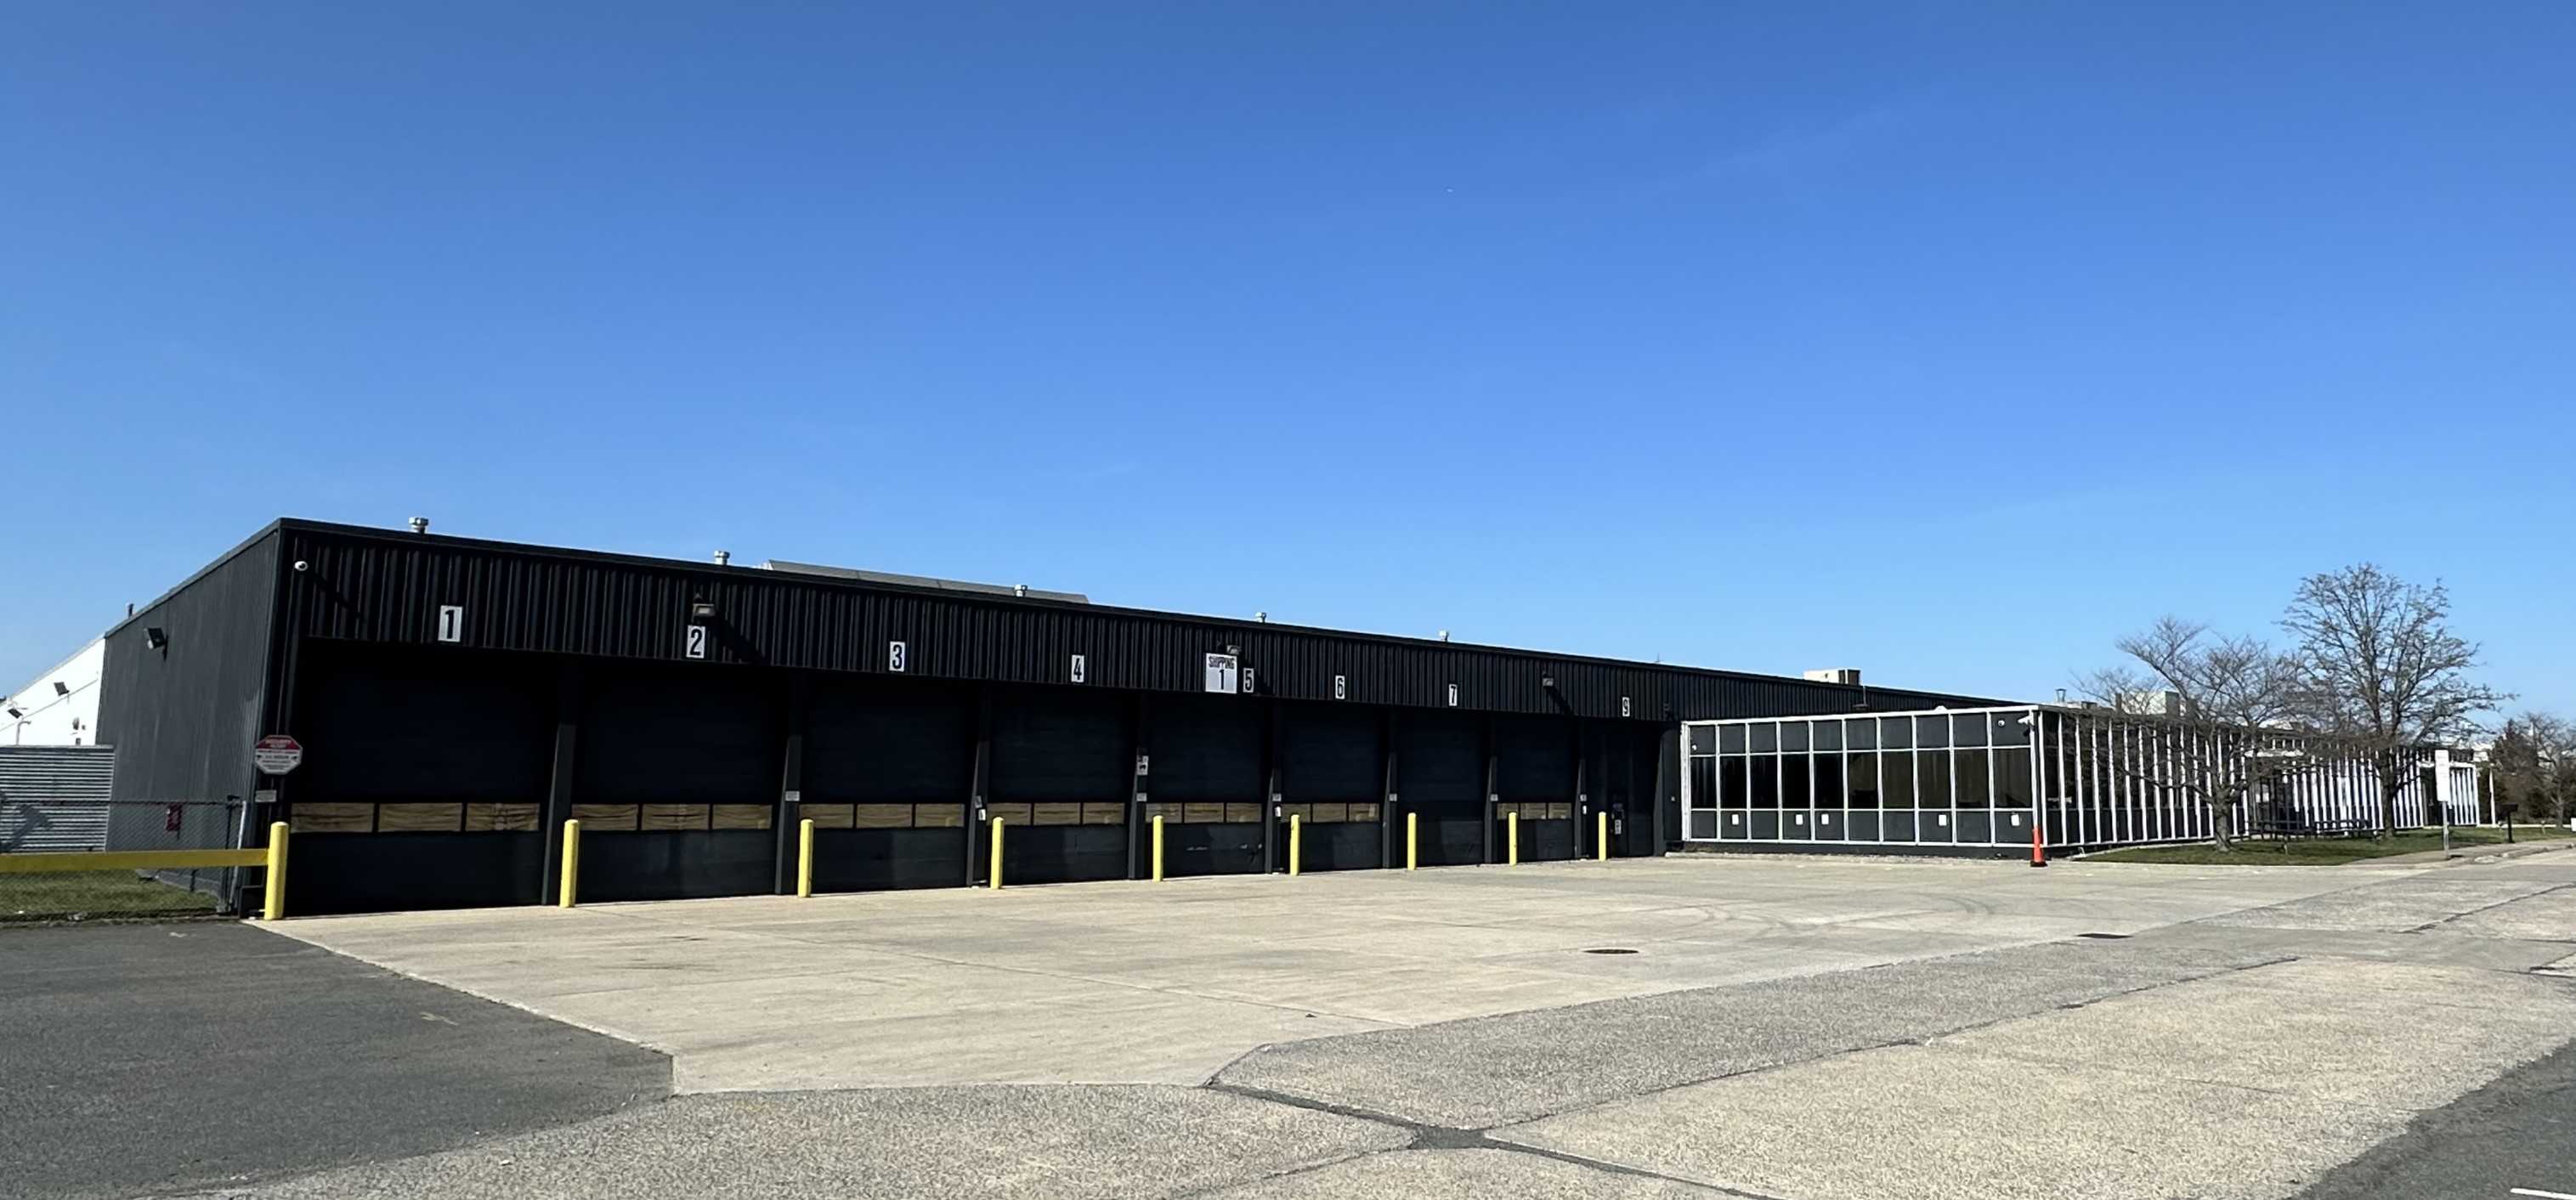 Avison Young arranges industrial property lease for Kamps Pallets in North Brunswick, NJ